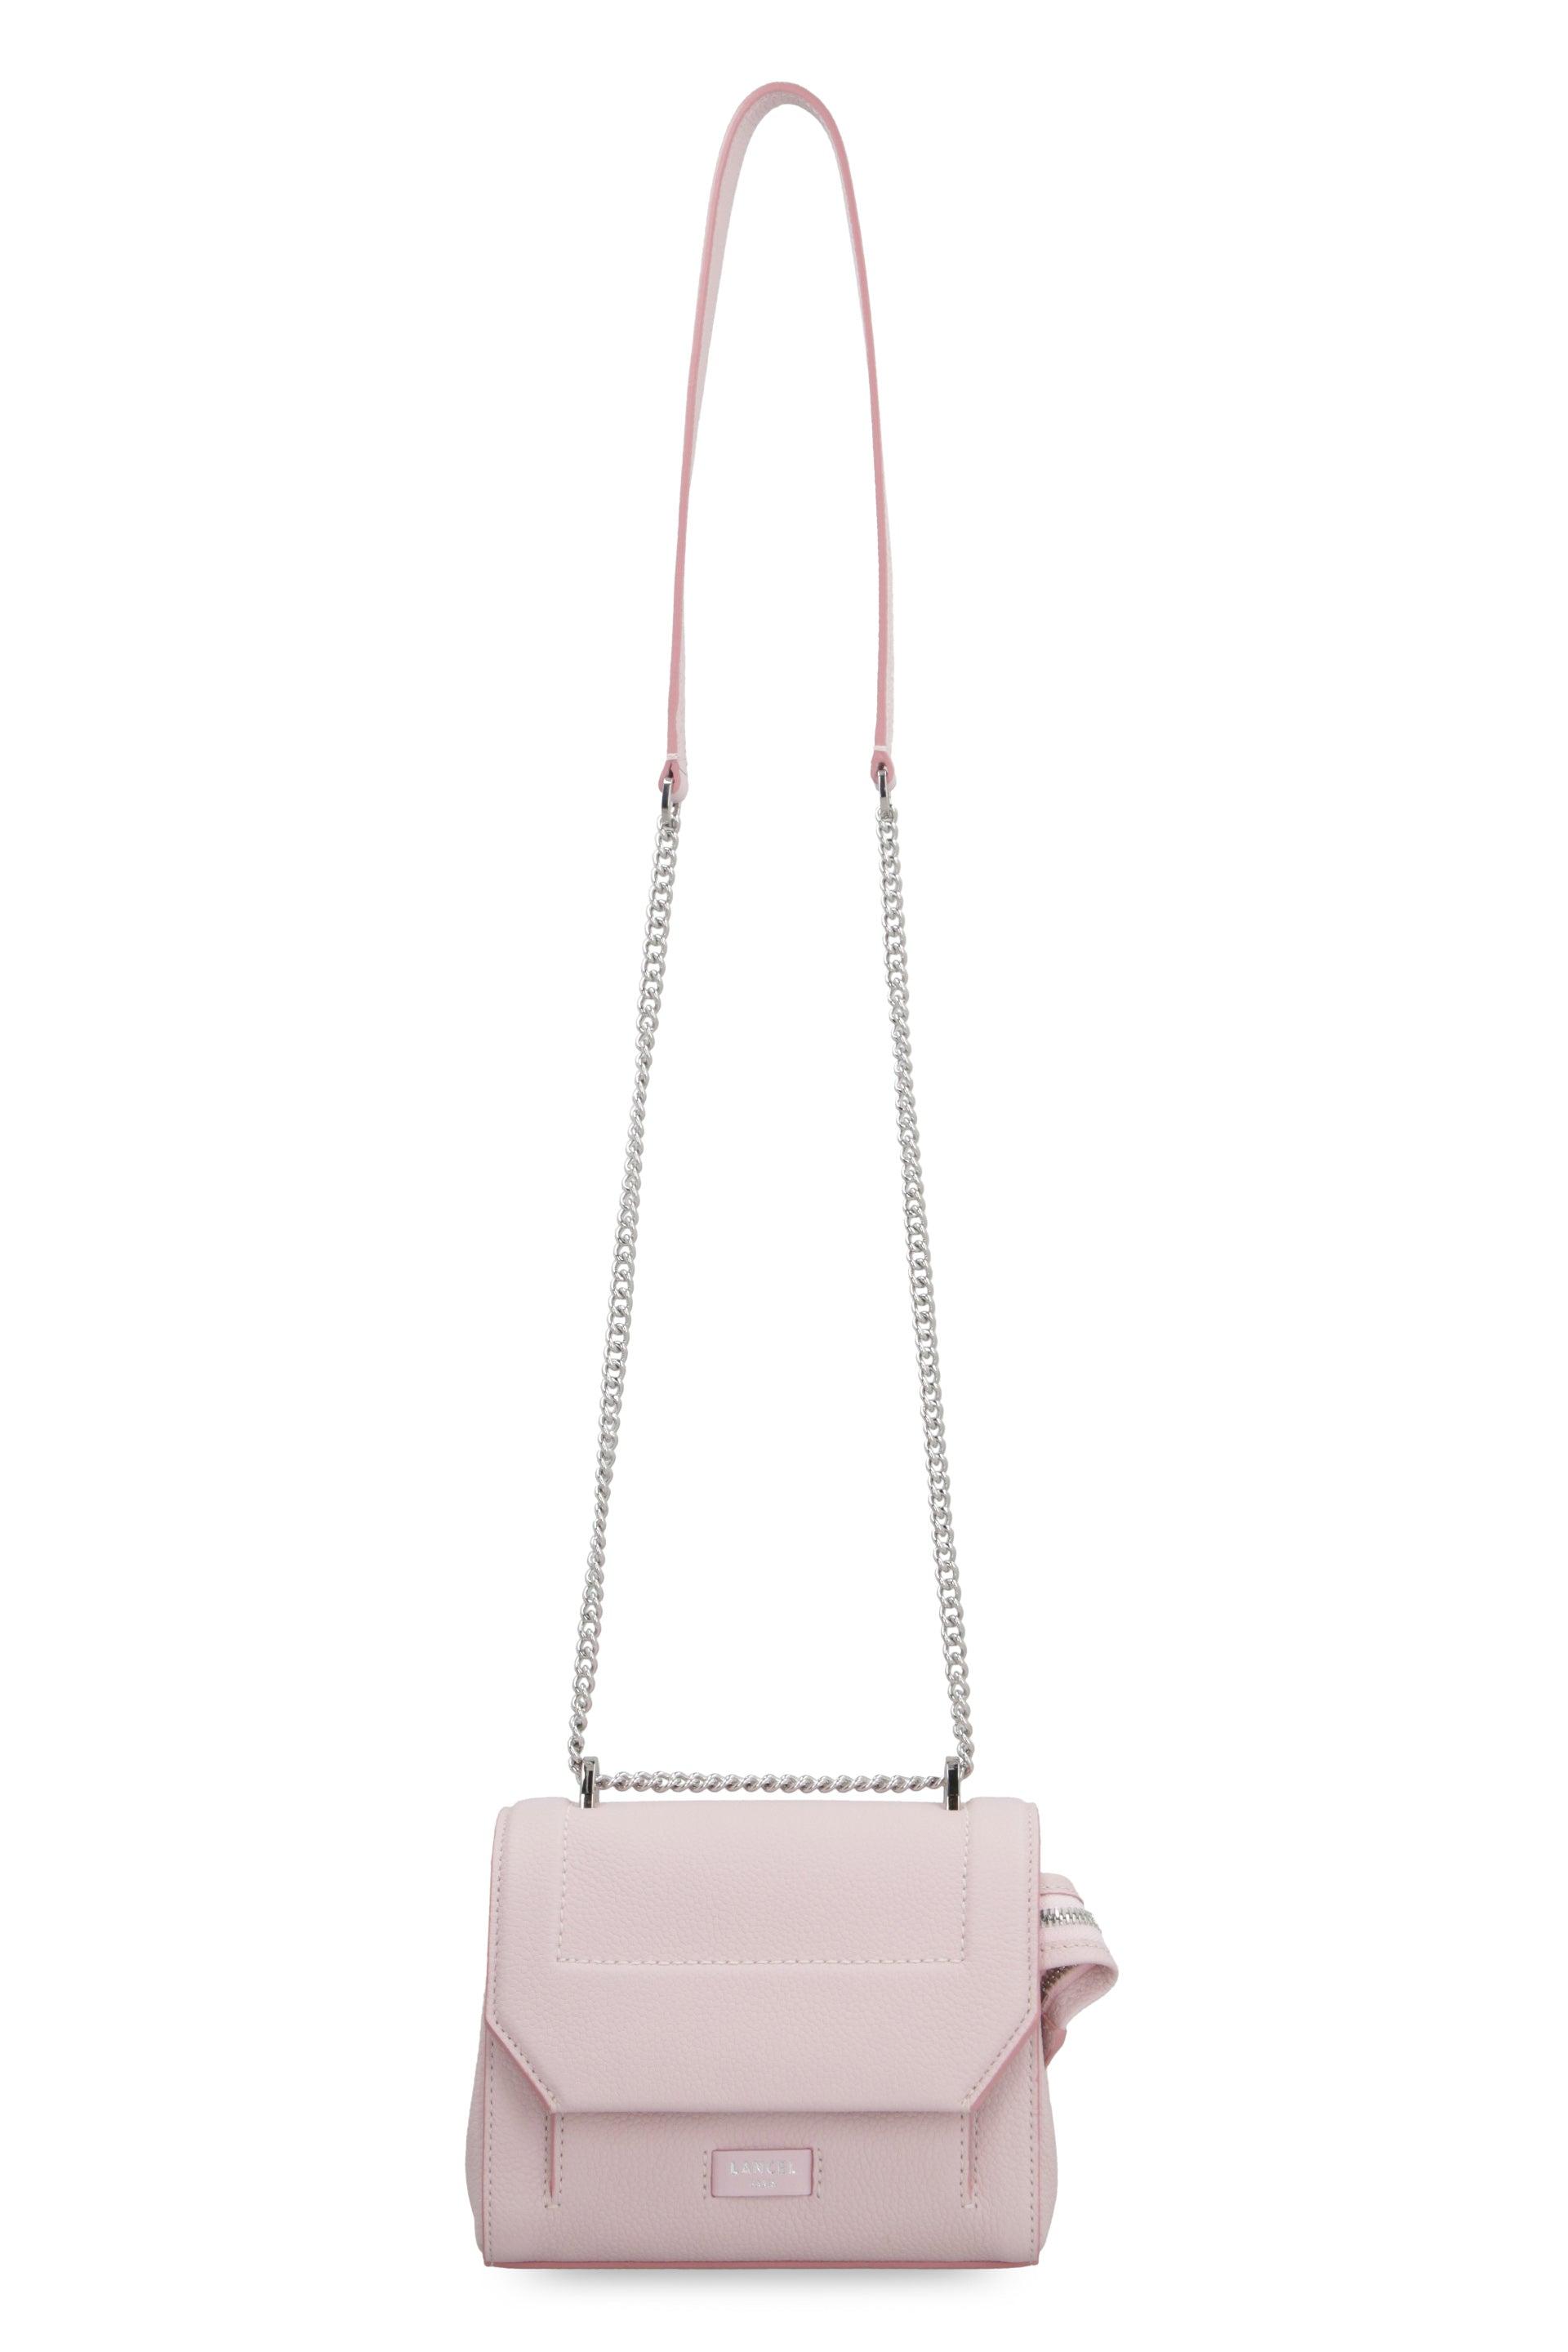 Lancel Ninon Leather Mini Handbag in Pink | Lyst